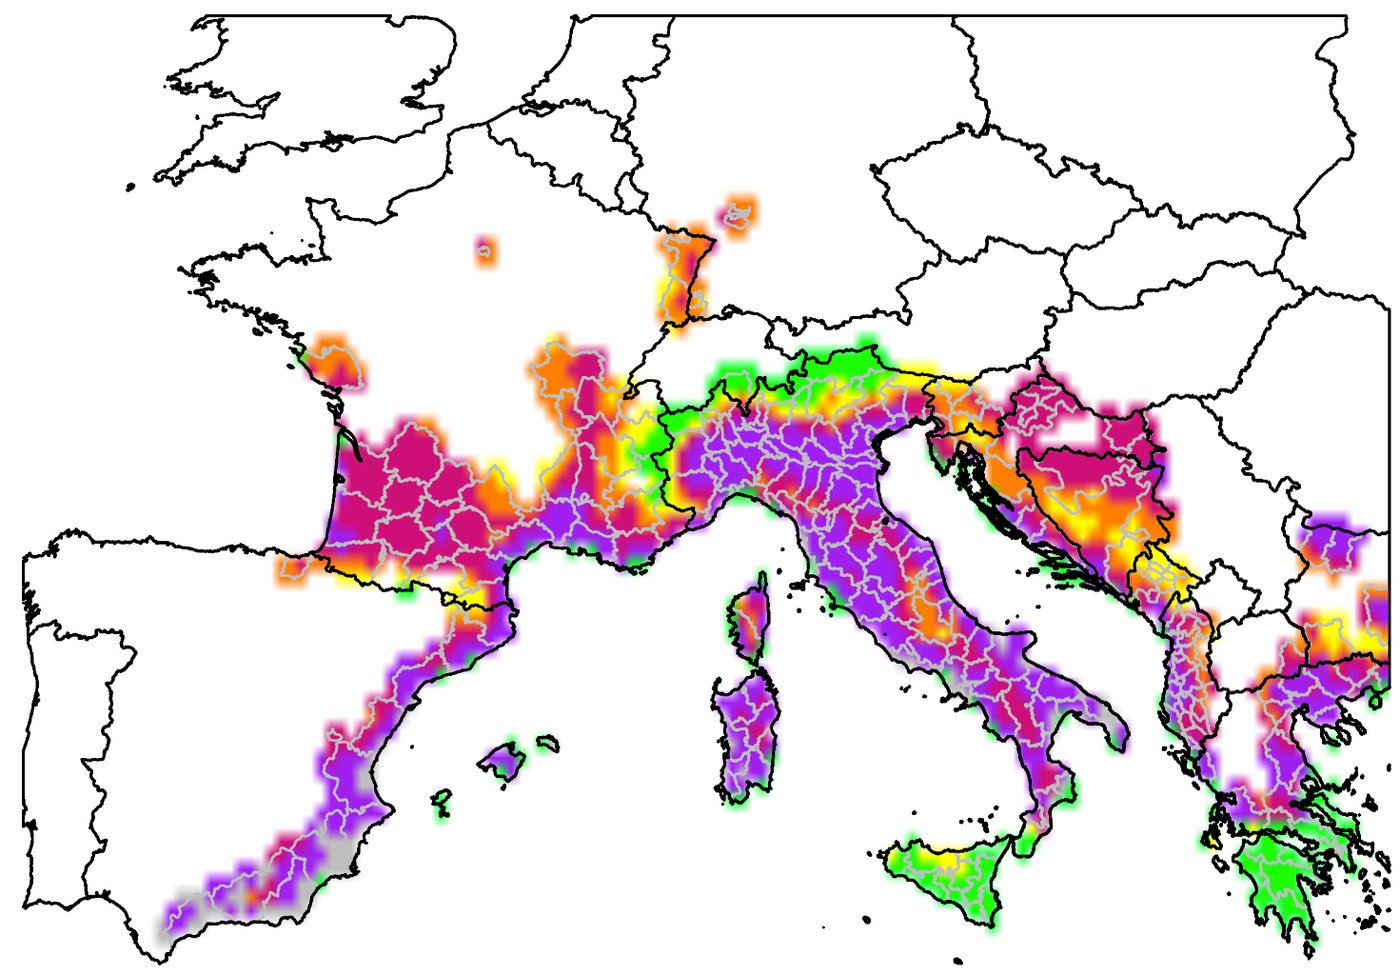 Risk map for the Chikungunya-Virus in Europe